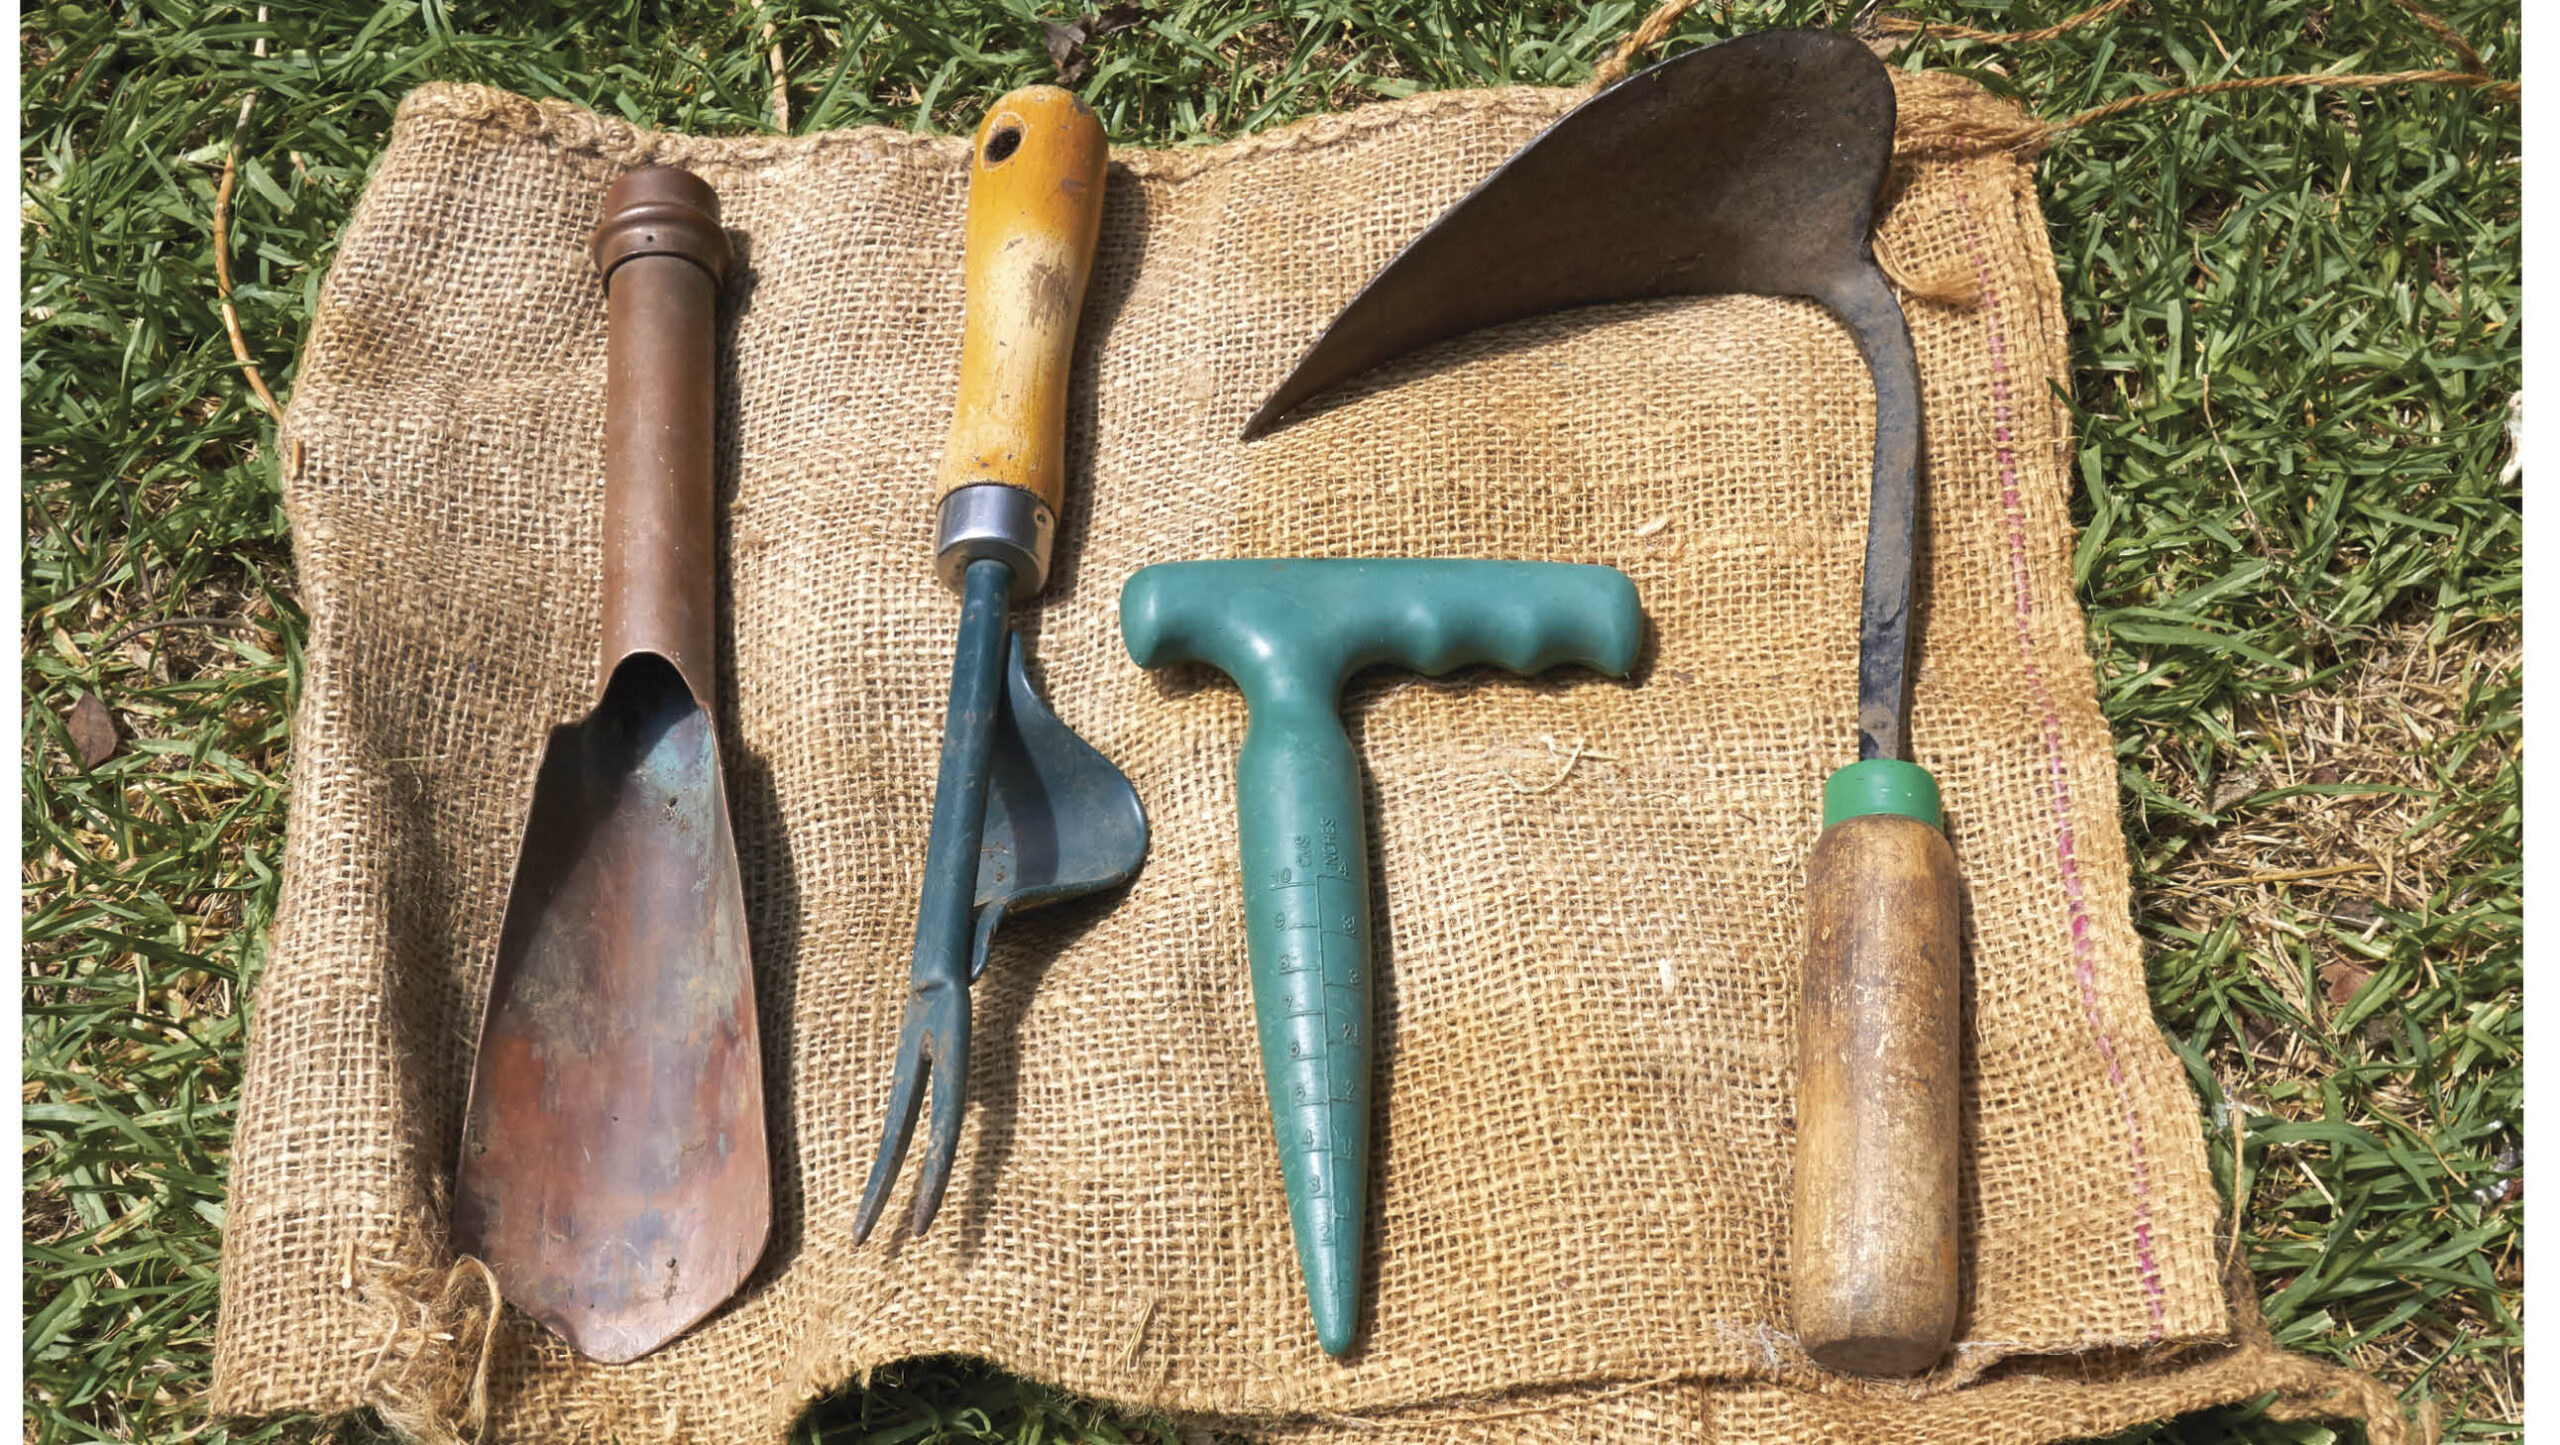 Handy tools for your garden